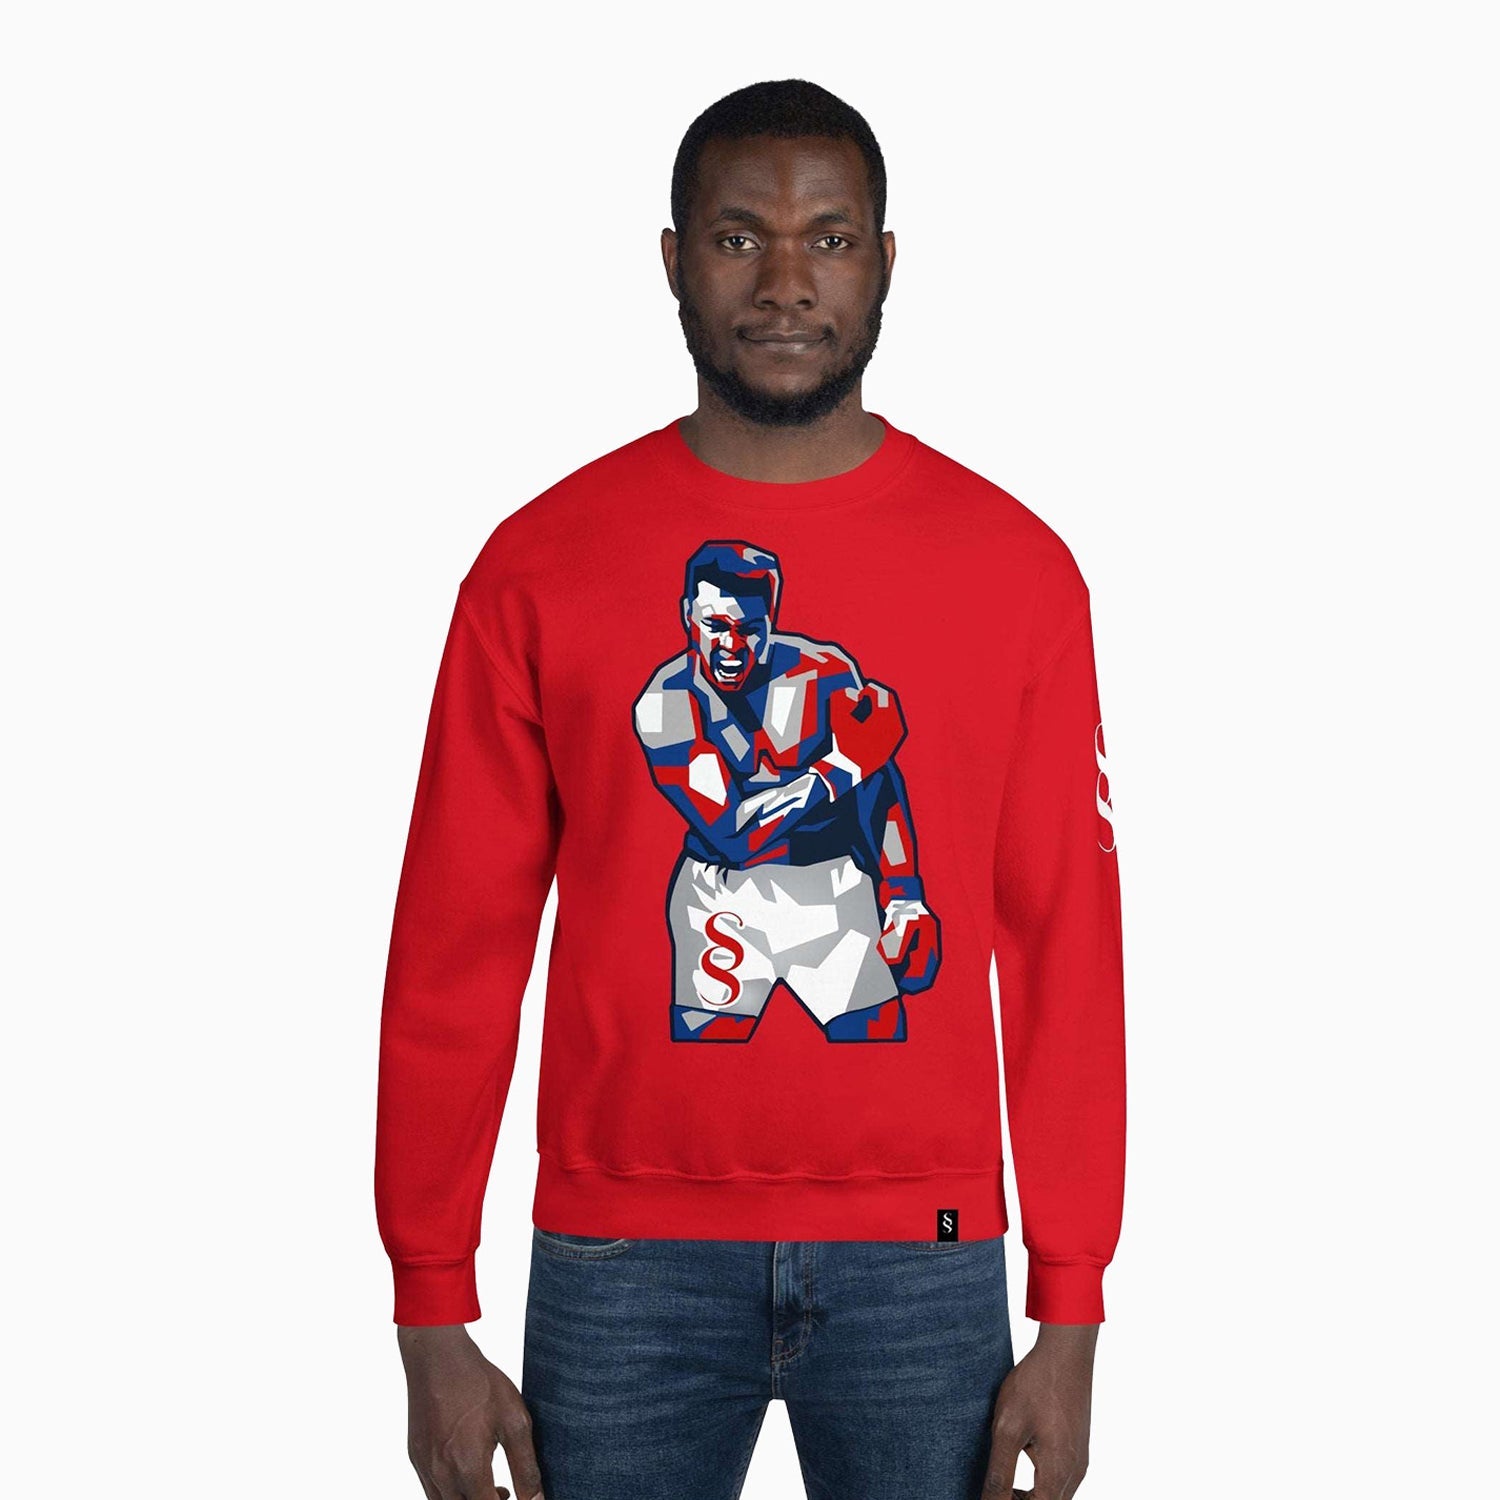 muhammad-ali-design-printed-crew-neck-red-sweatshirt-for-men-sc112-657